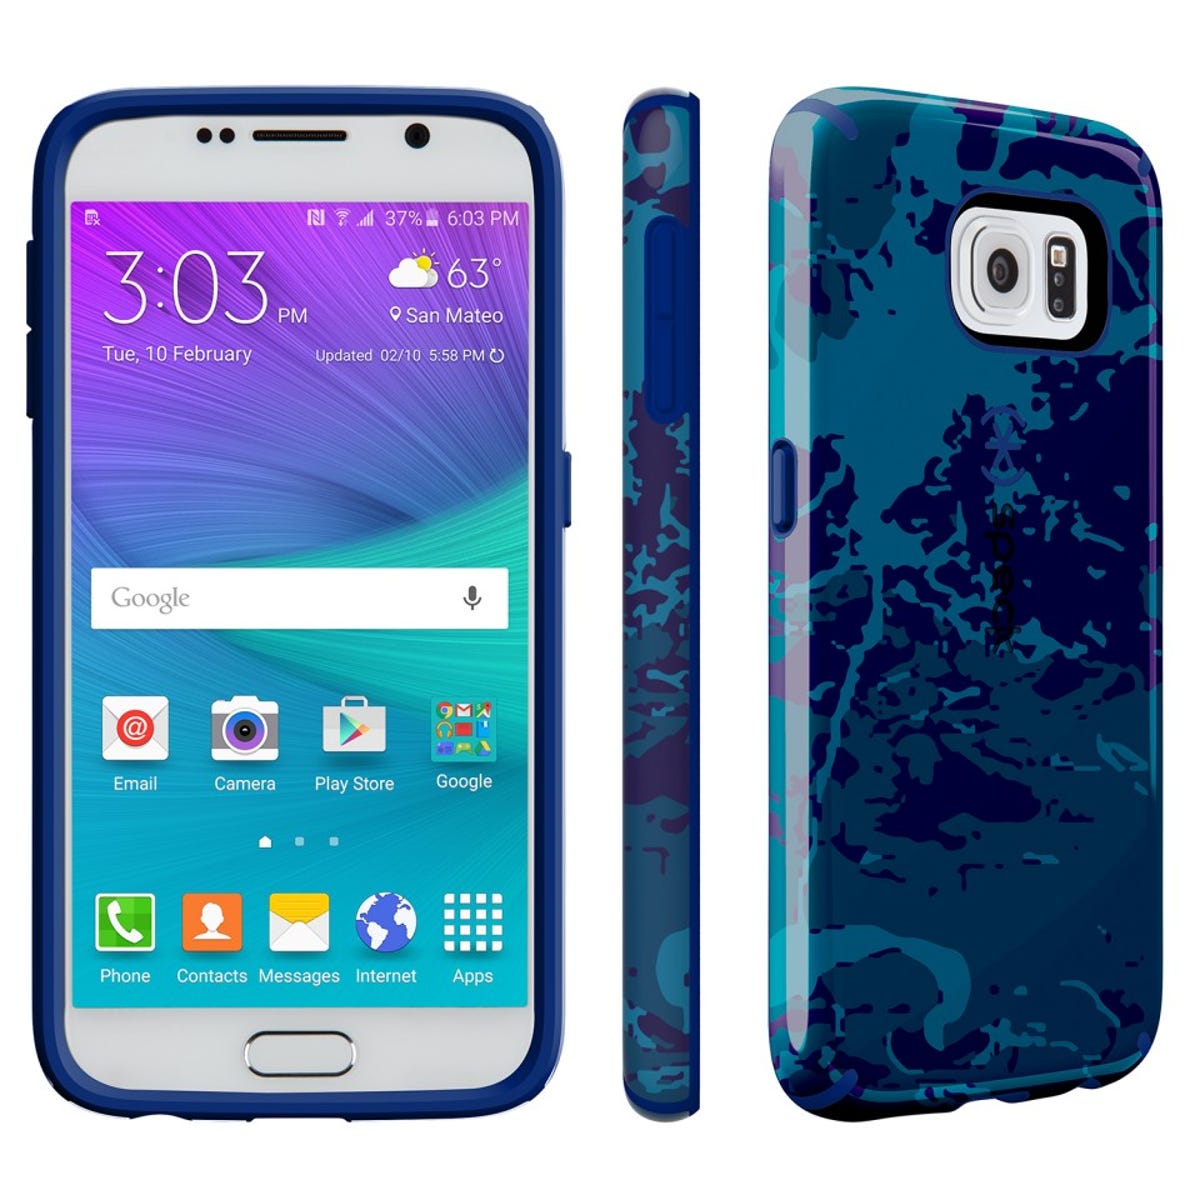 verhaal rijkdom Kalmte Best Samsung Galaxy S6 and S6 Edge cases - CNET